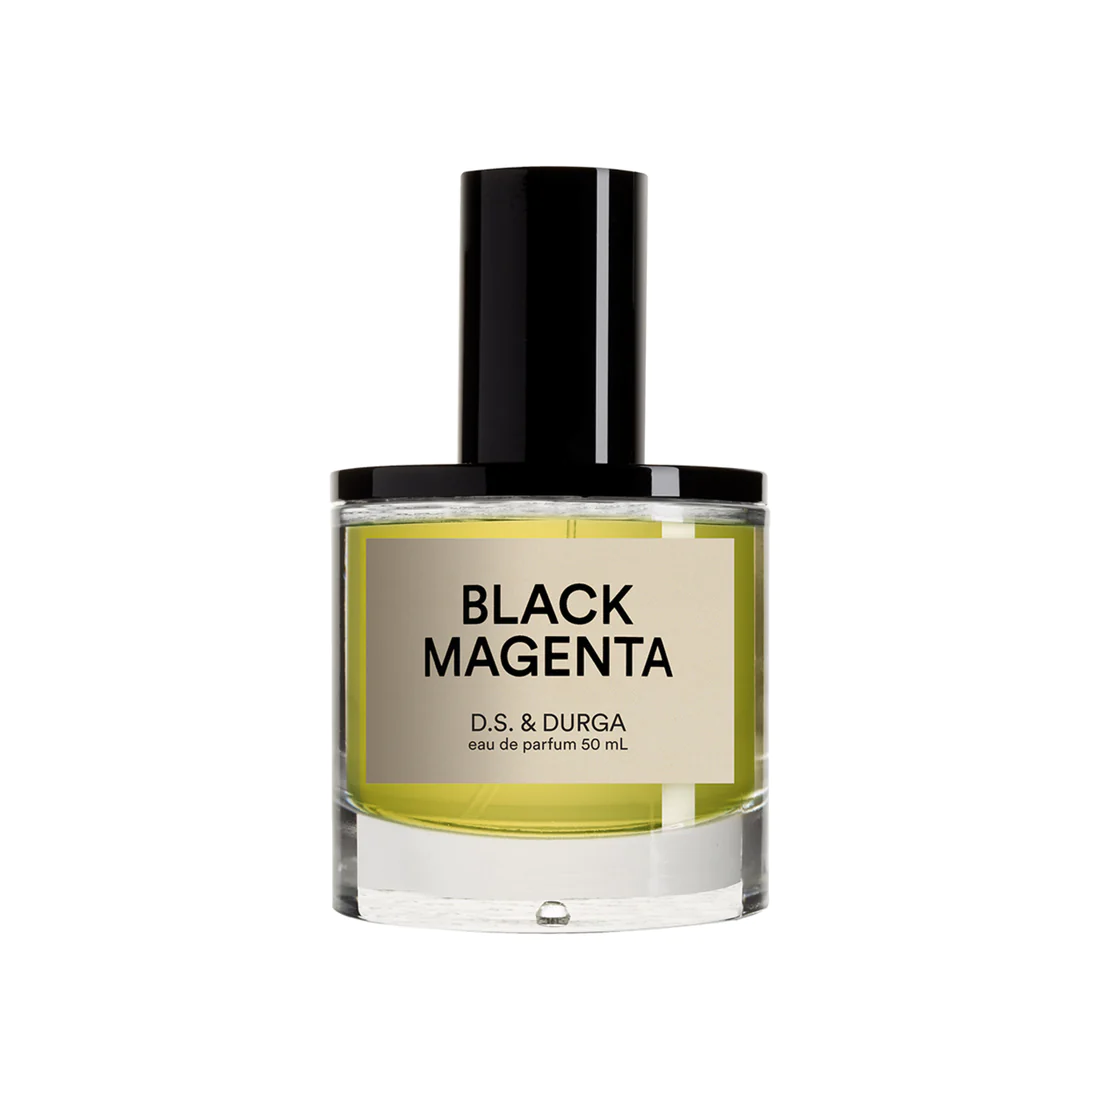 Black Magenta Eau de Parfum 50ml - D.S. & DURGA